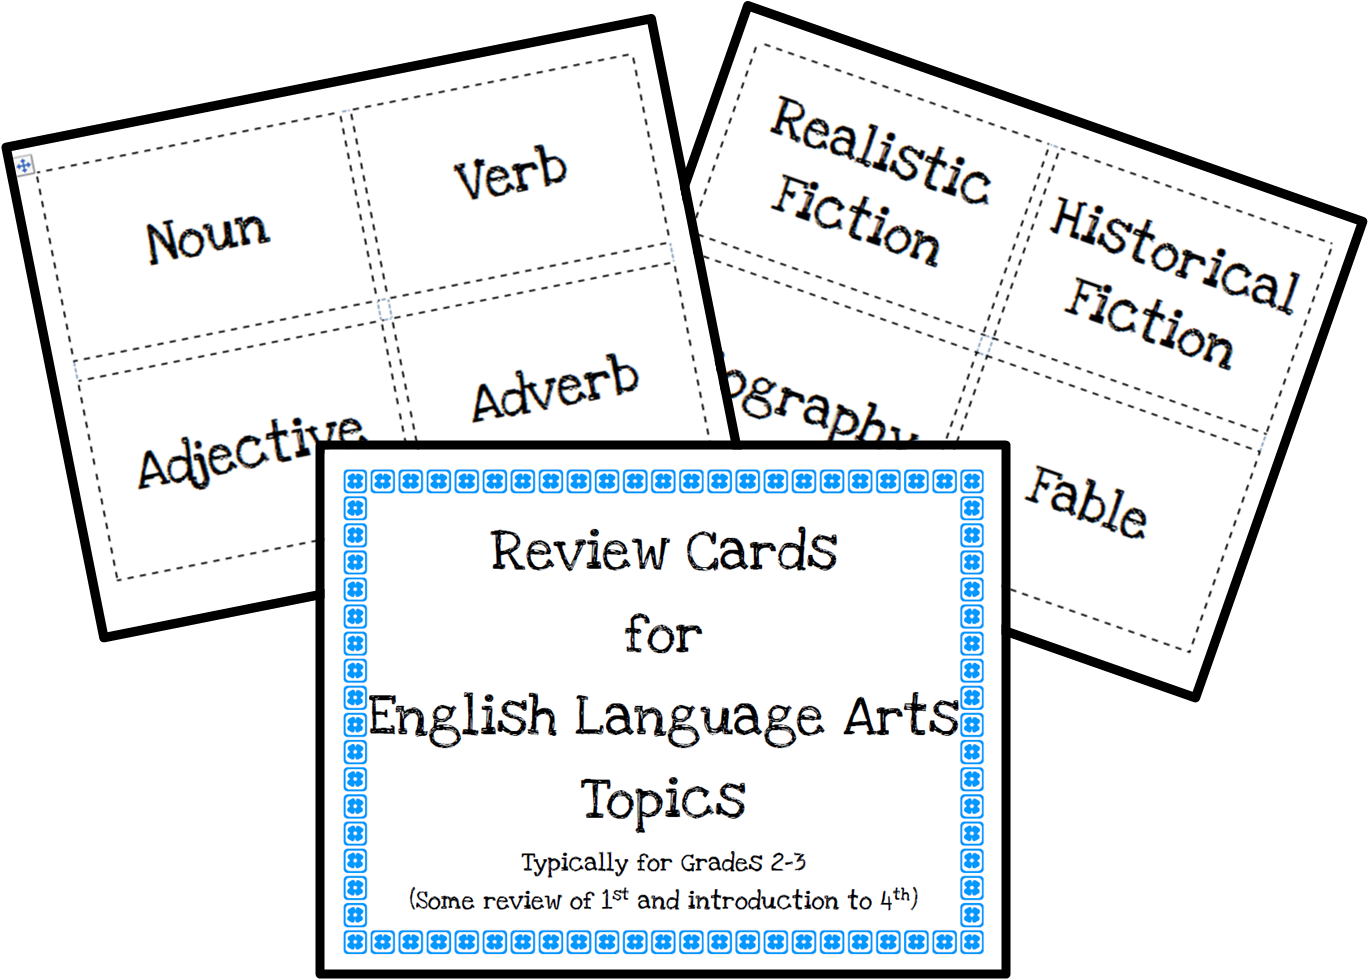 http://www.teacherspayteachers.com/Product/English-Language-Arts-Review-Cards-1098119